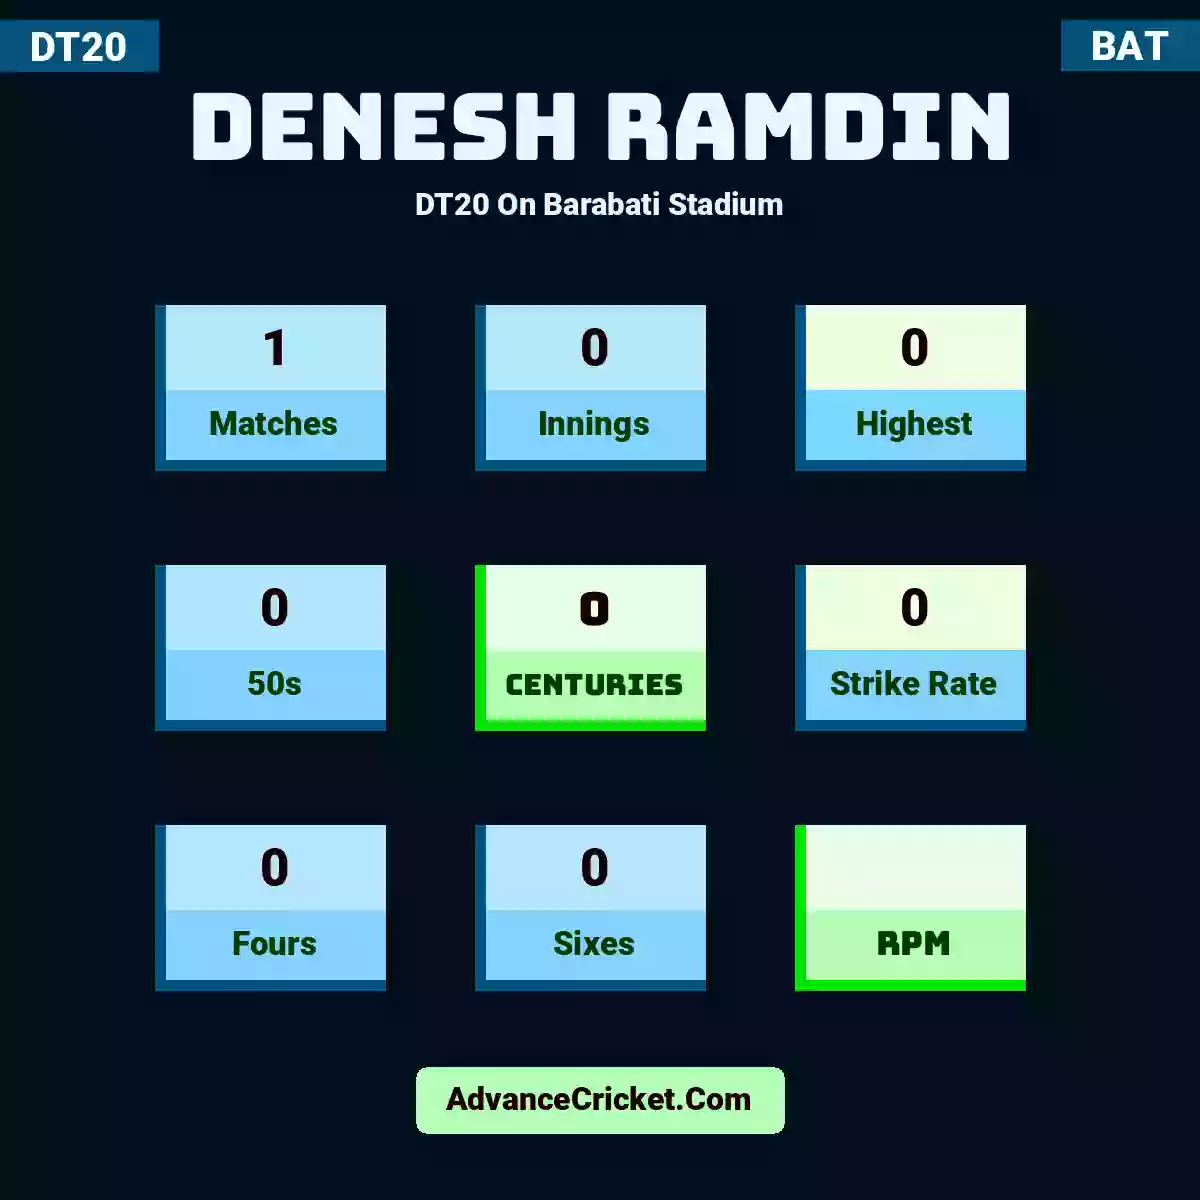 Denesh Ramdin DT20  On Barabati Stadium, Denesh Ramdin played 1 matches, scored 0 runs as highest, 0 half-centuries, and 0 centuries, with a strike rate of 0. D.Ramdin hit 0 fours and 0 sixes.